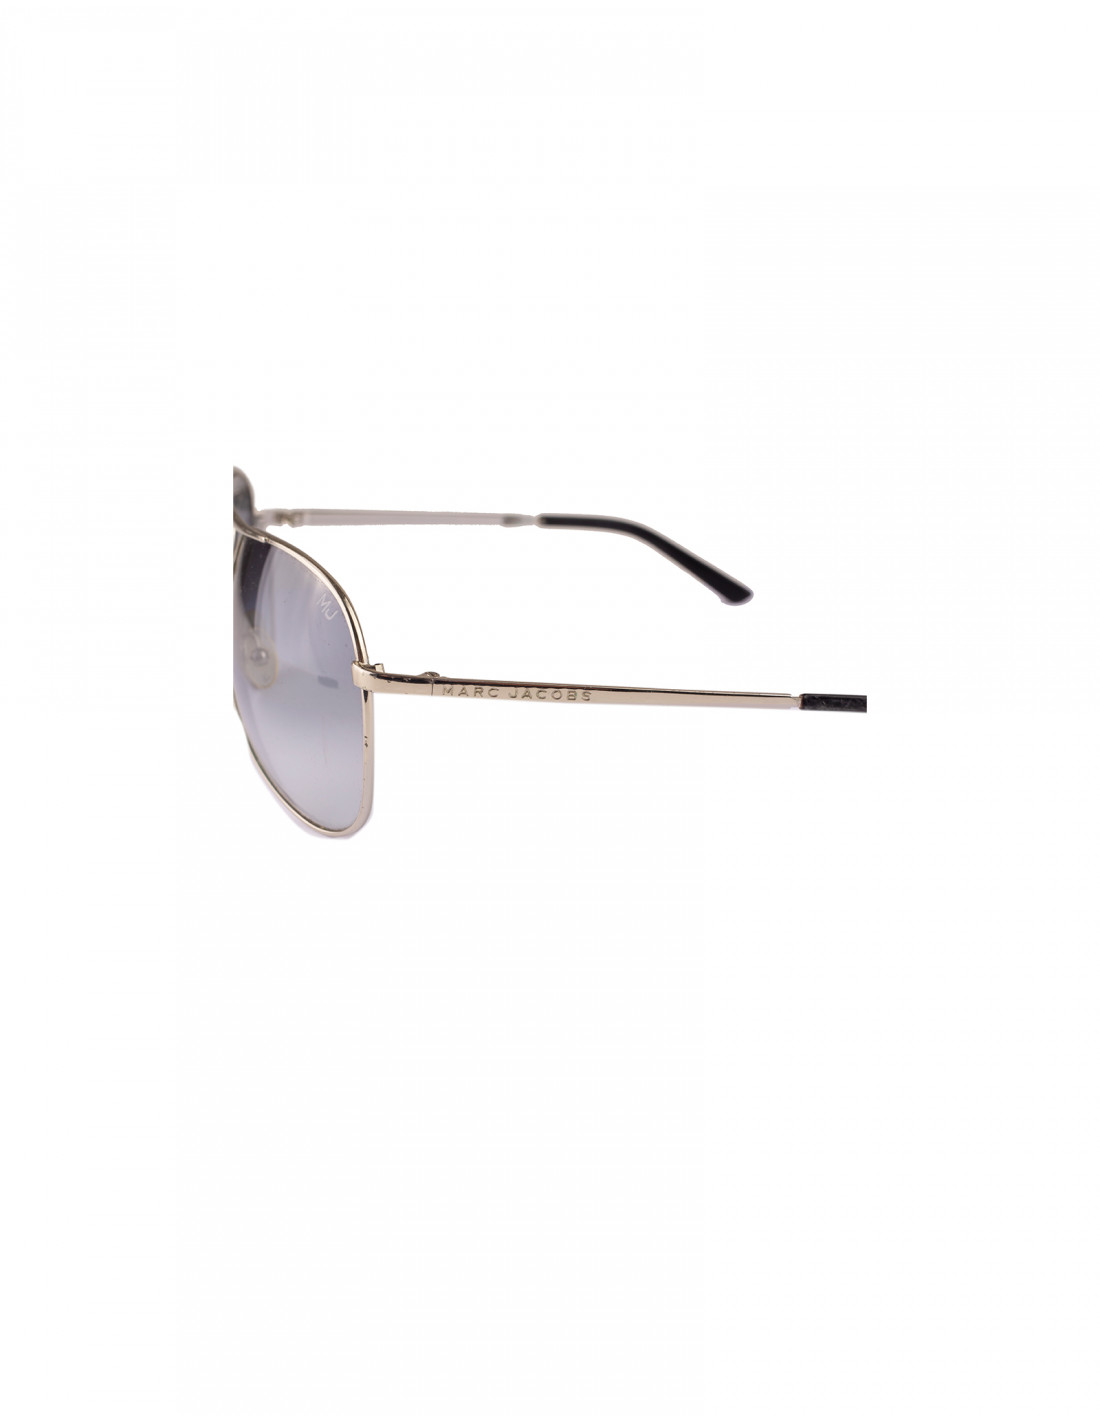 Marc Jacobs 54mm Oversized Black/white Sunglasses | White sunglasses, Marc  jacobs sunglasses, Marc jacobs